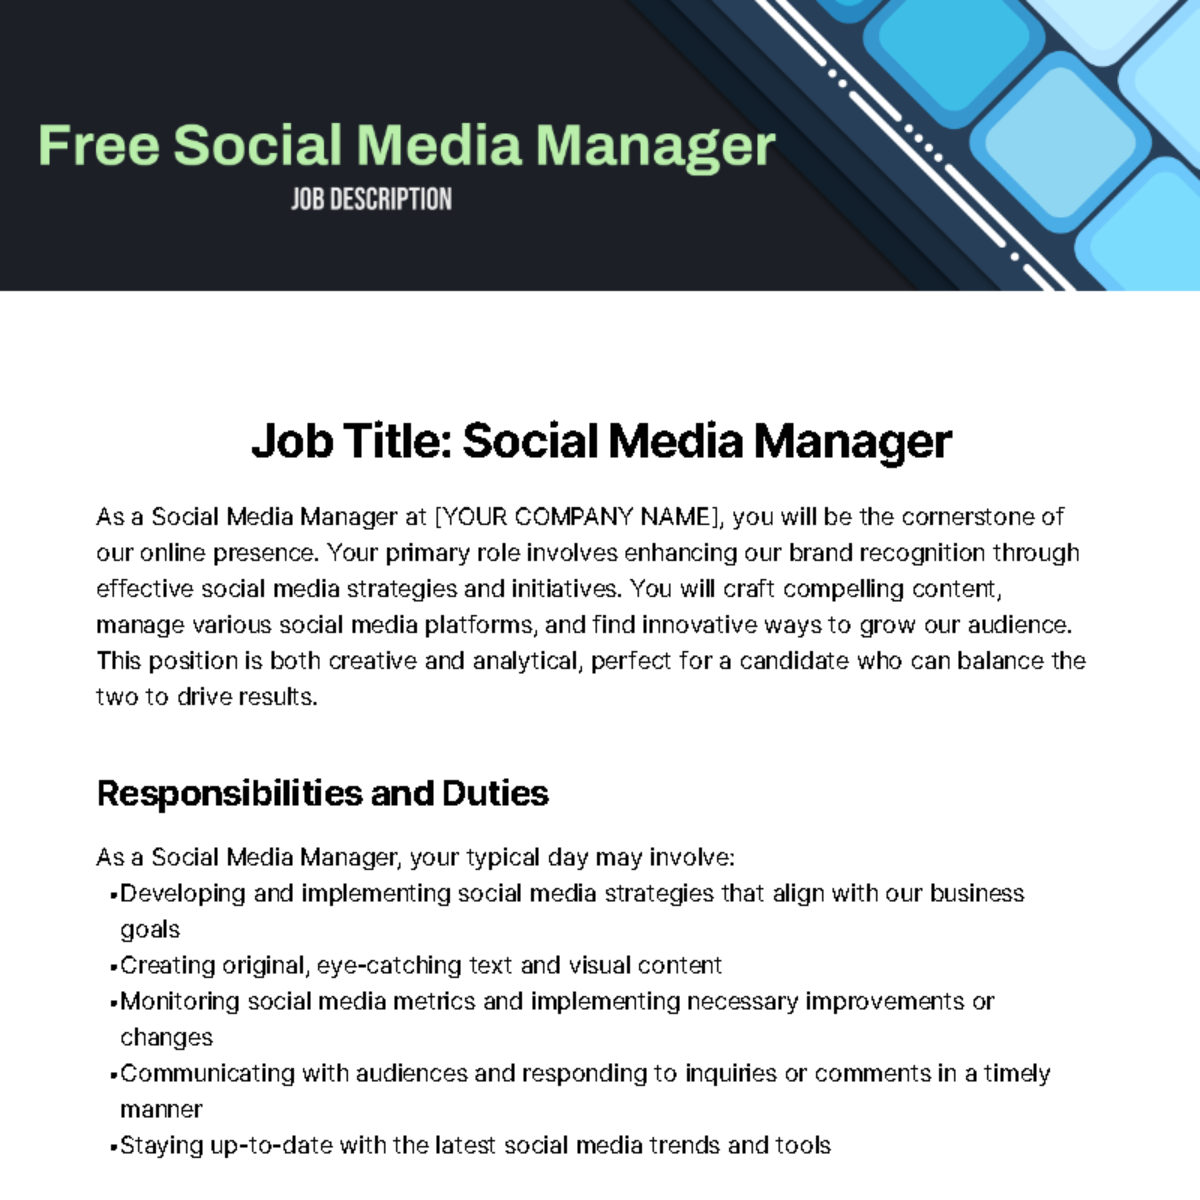 Free Social Media Manager Job Description Template